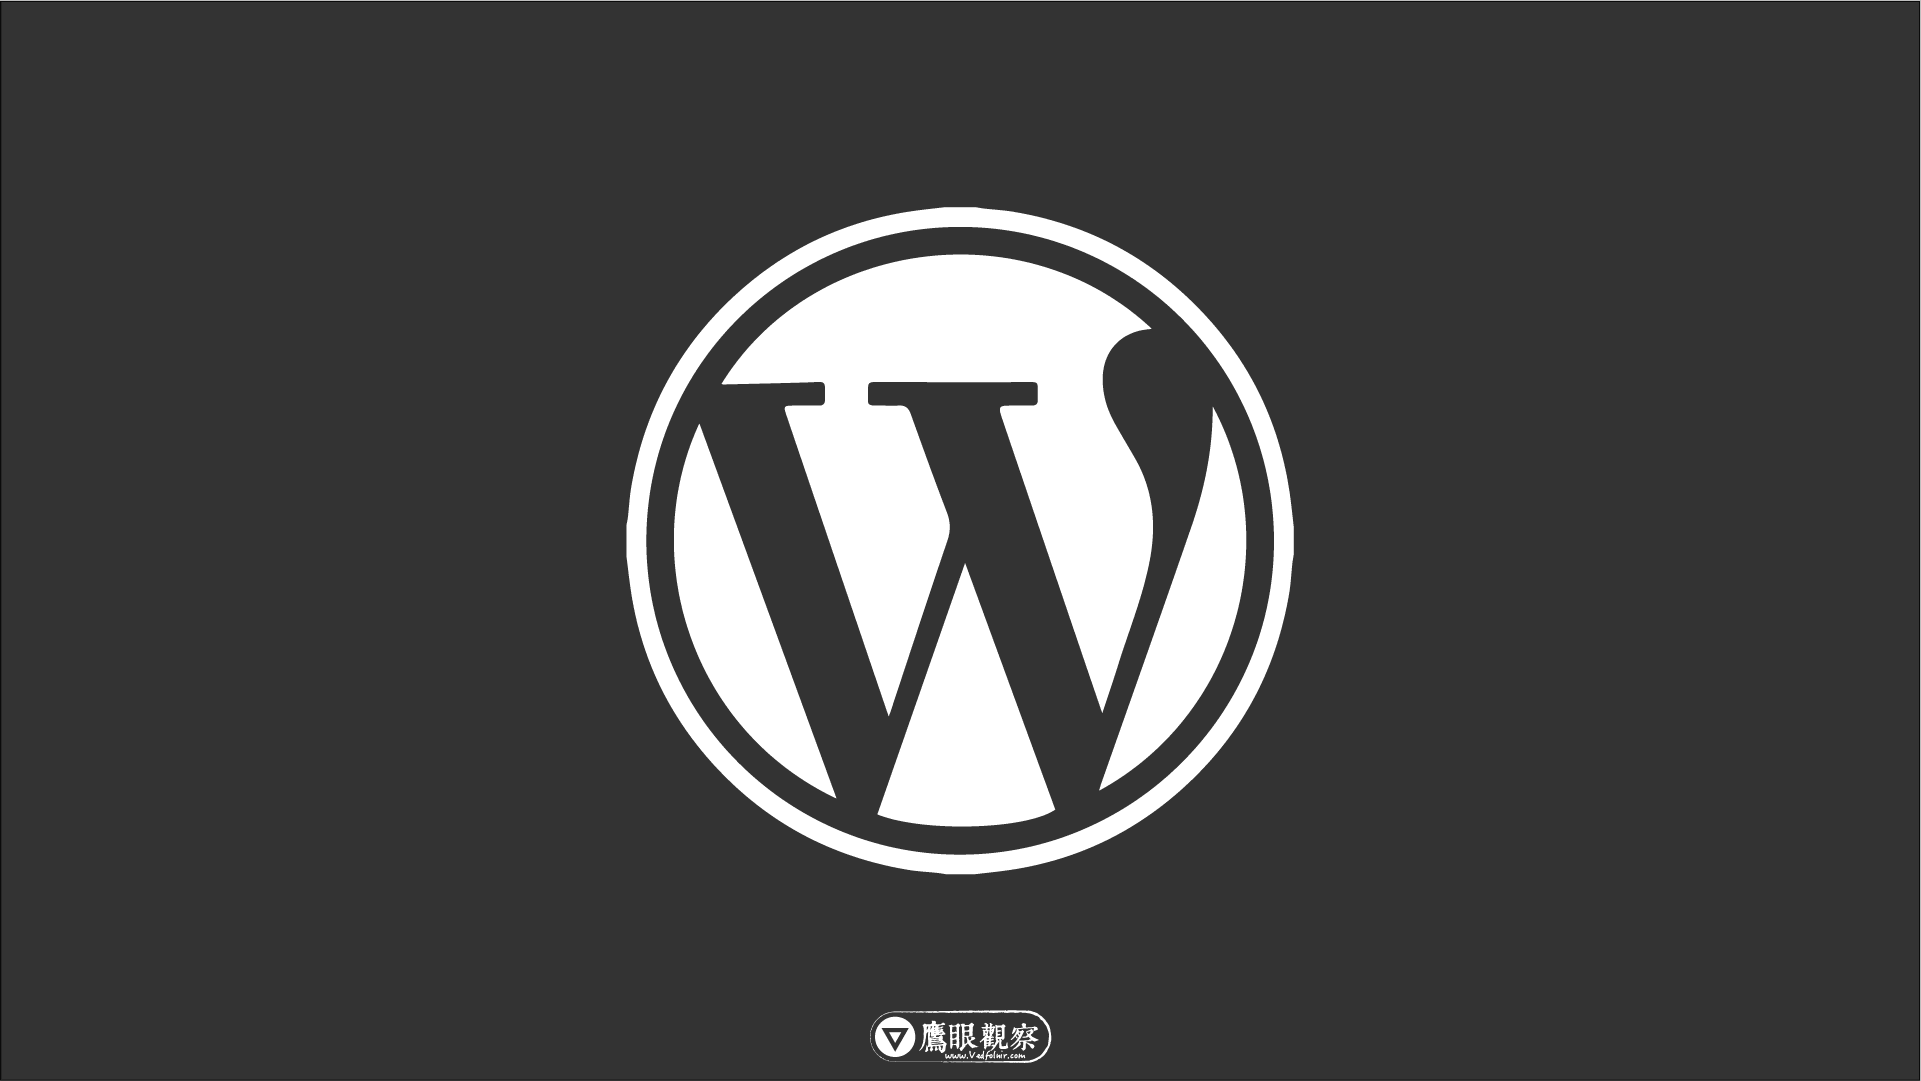 JavaScript 程式碼禁用滑鼠右鍵呼叫功能選單 / Html WordPress 網站 WordPress Logo Wallpaper 2018